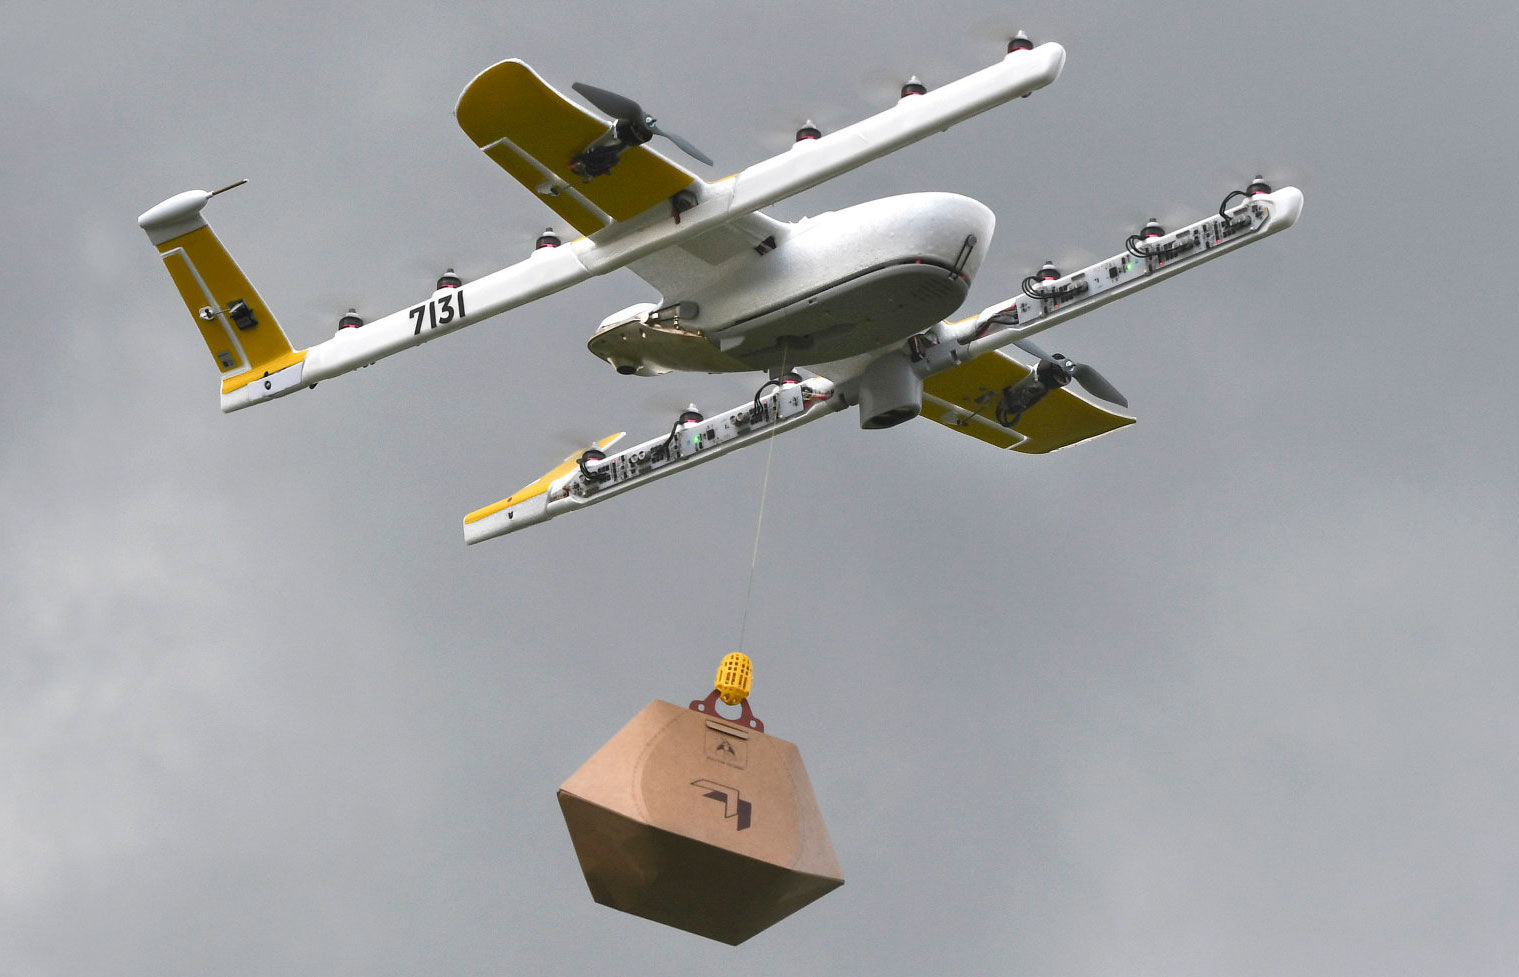 Alphabet 旗下公司 Wing 取得美國首個無人機配送服務許可